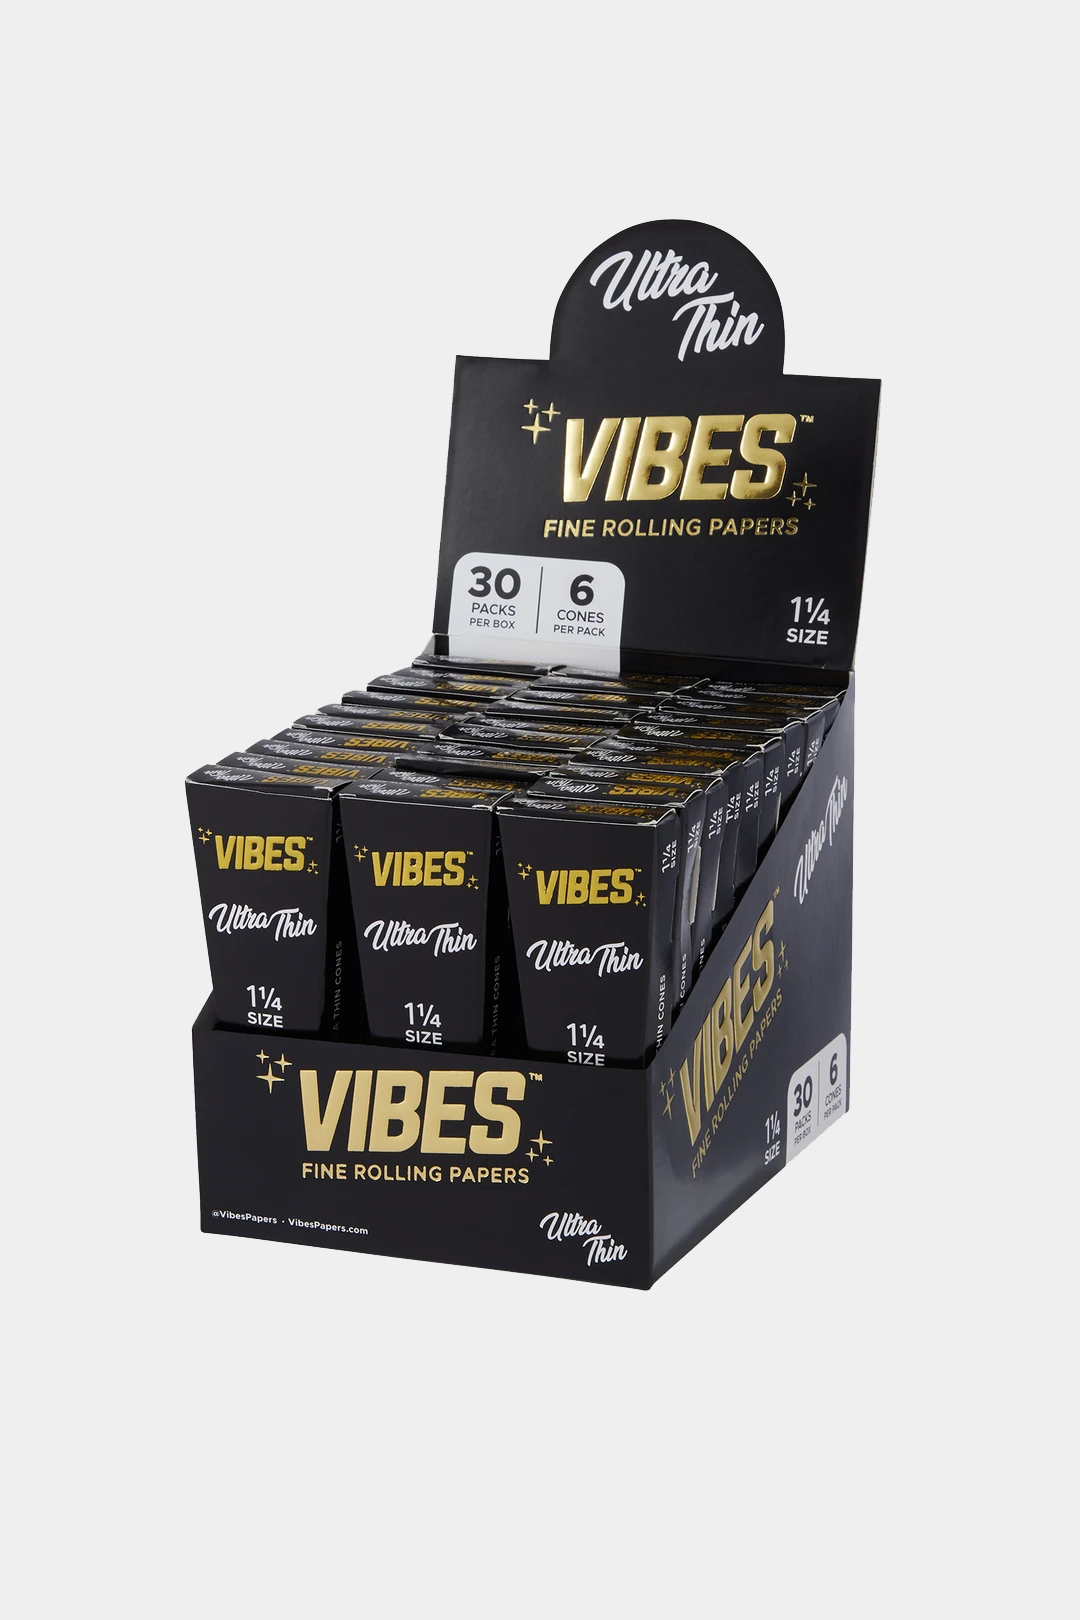 Vibes - Ultra Thin 1 ¼ Cone 6pk - 40CT Display